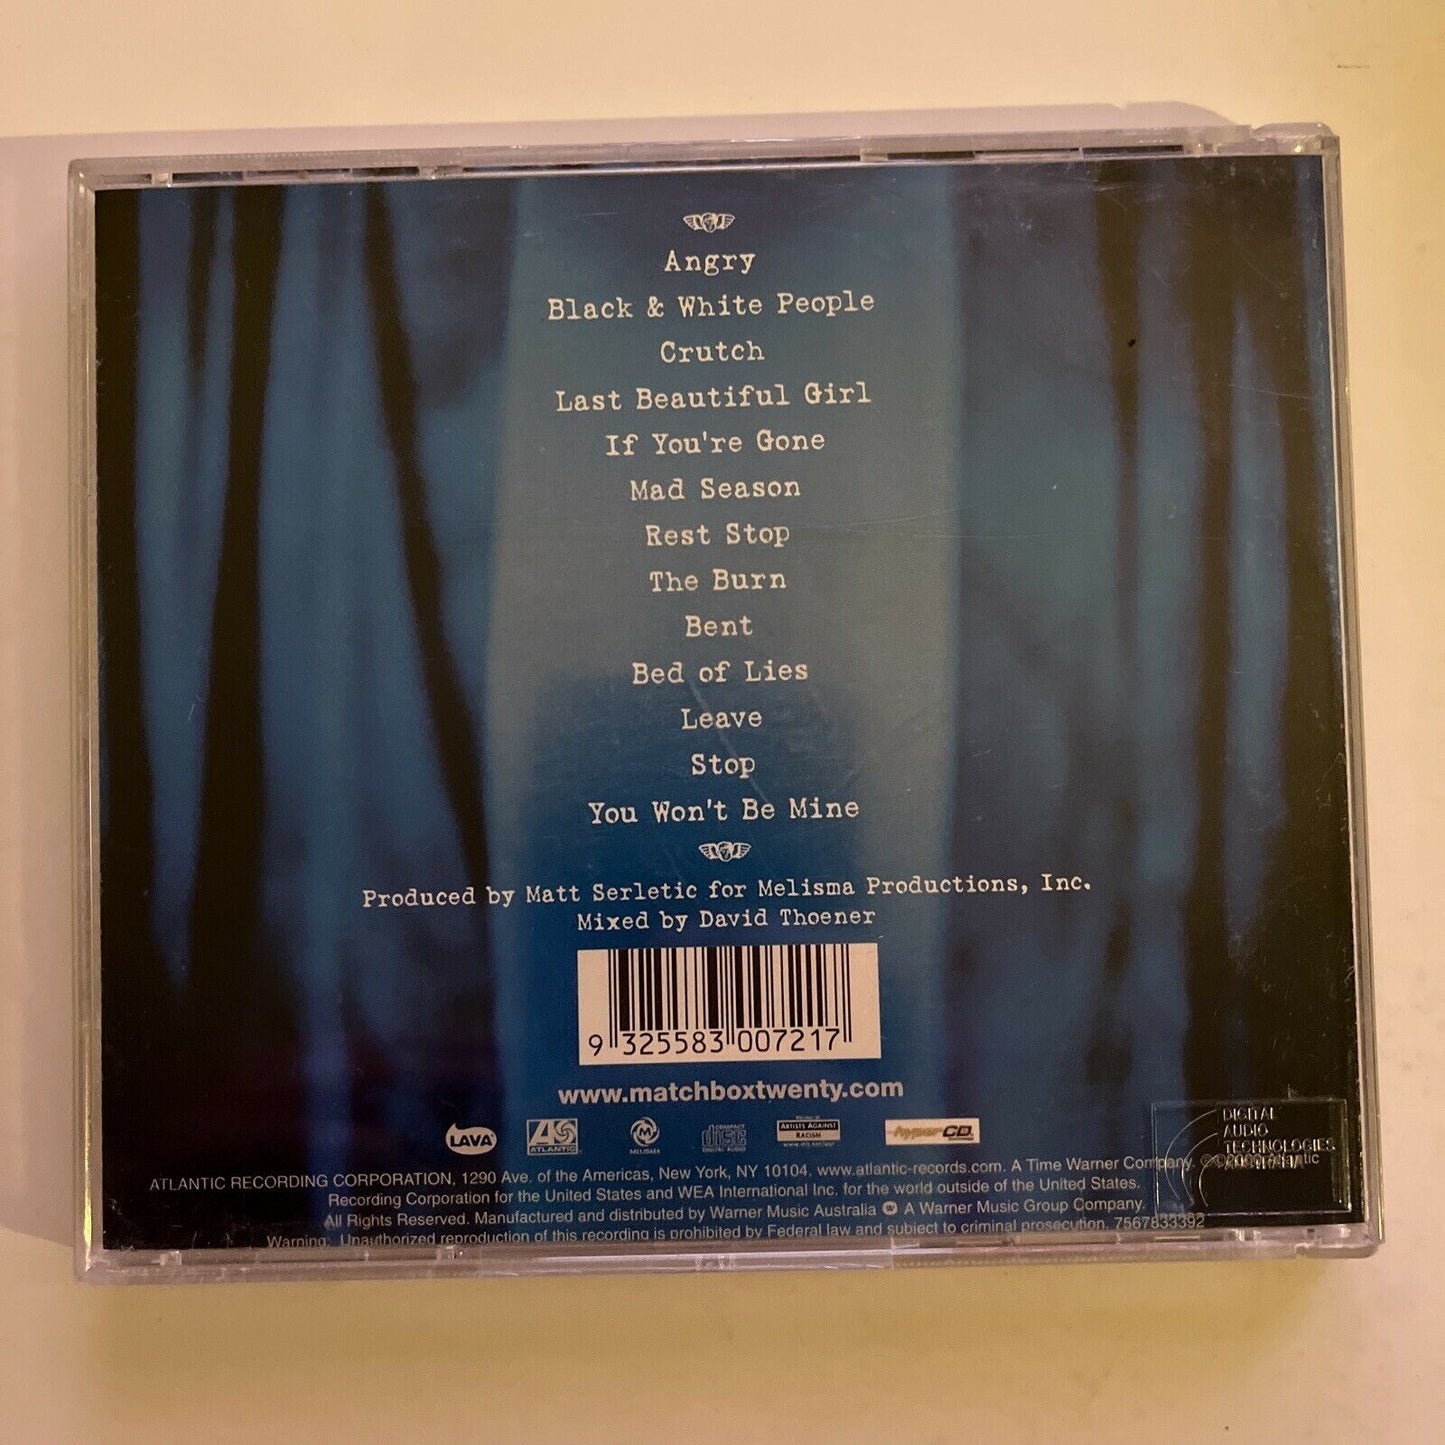 Matchbox Twenty – Mad Season (CD, 2000) Album